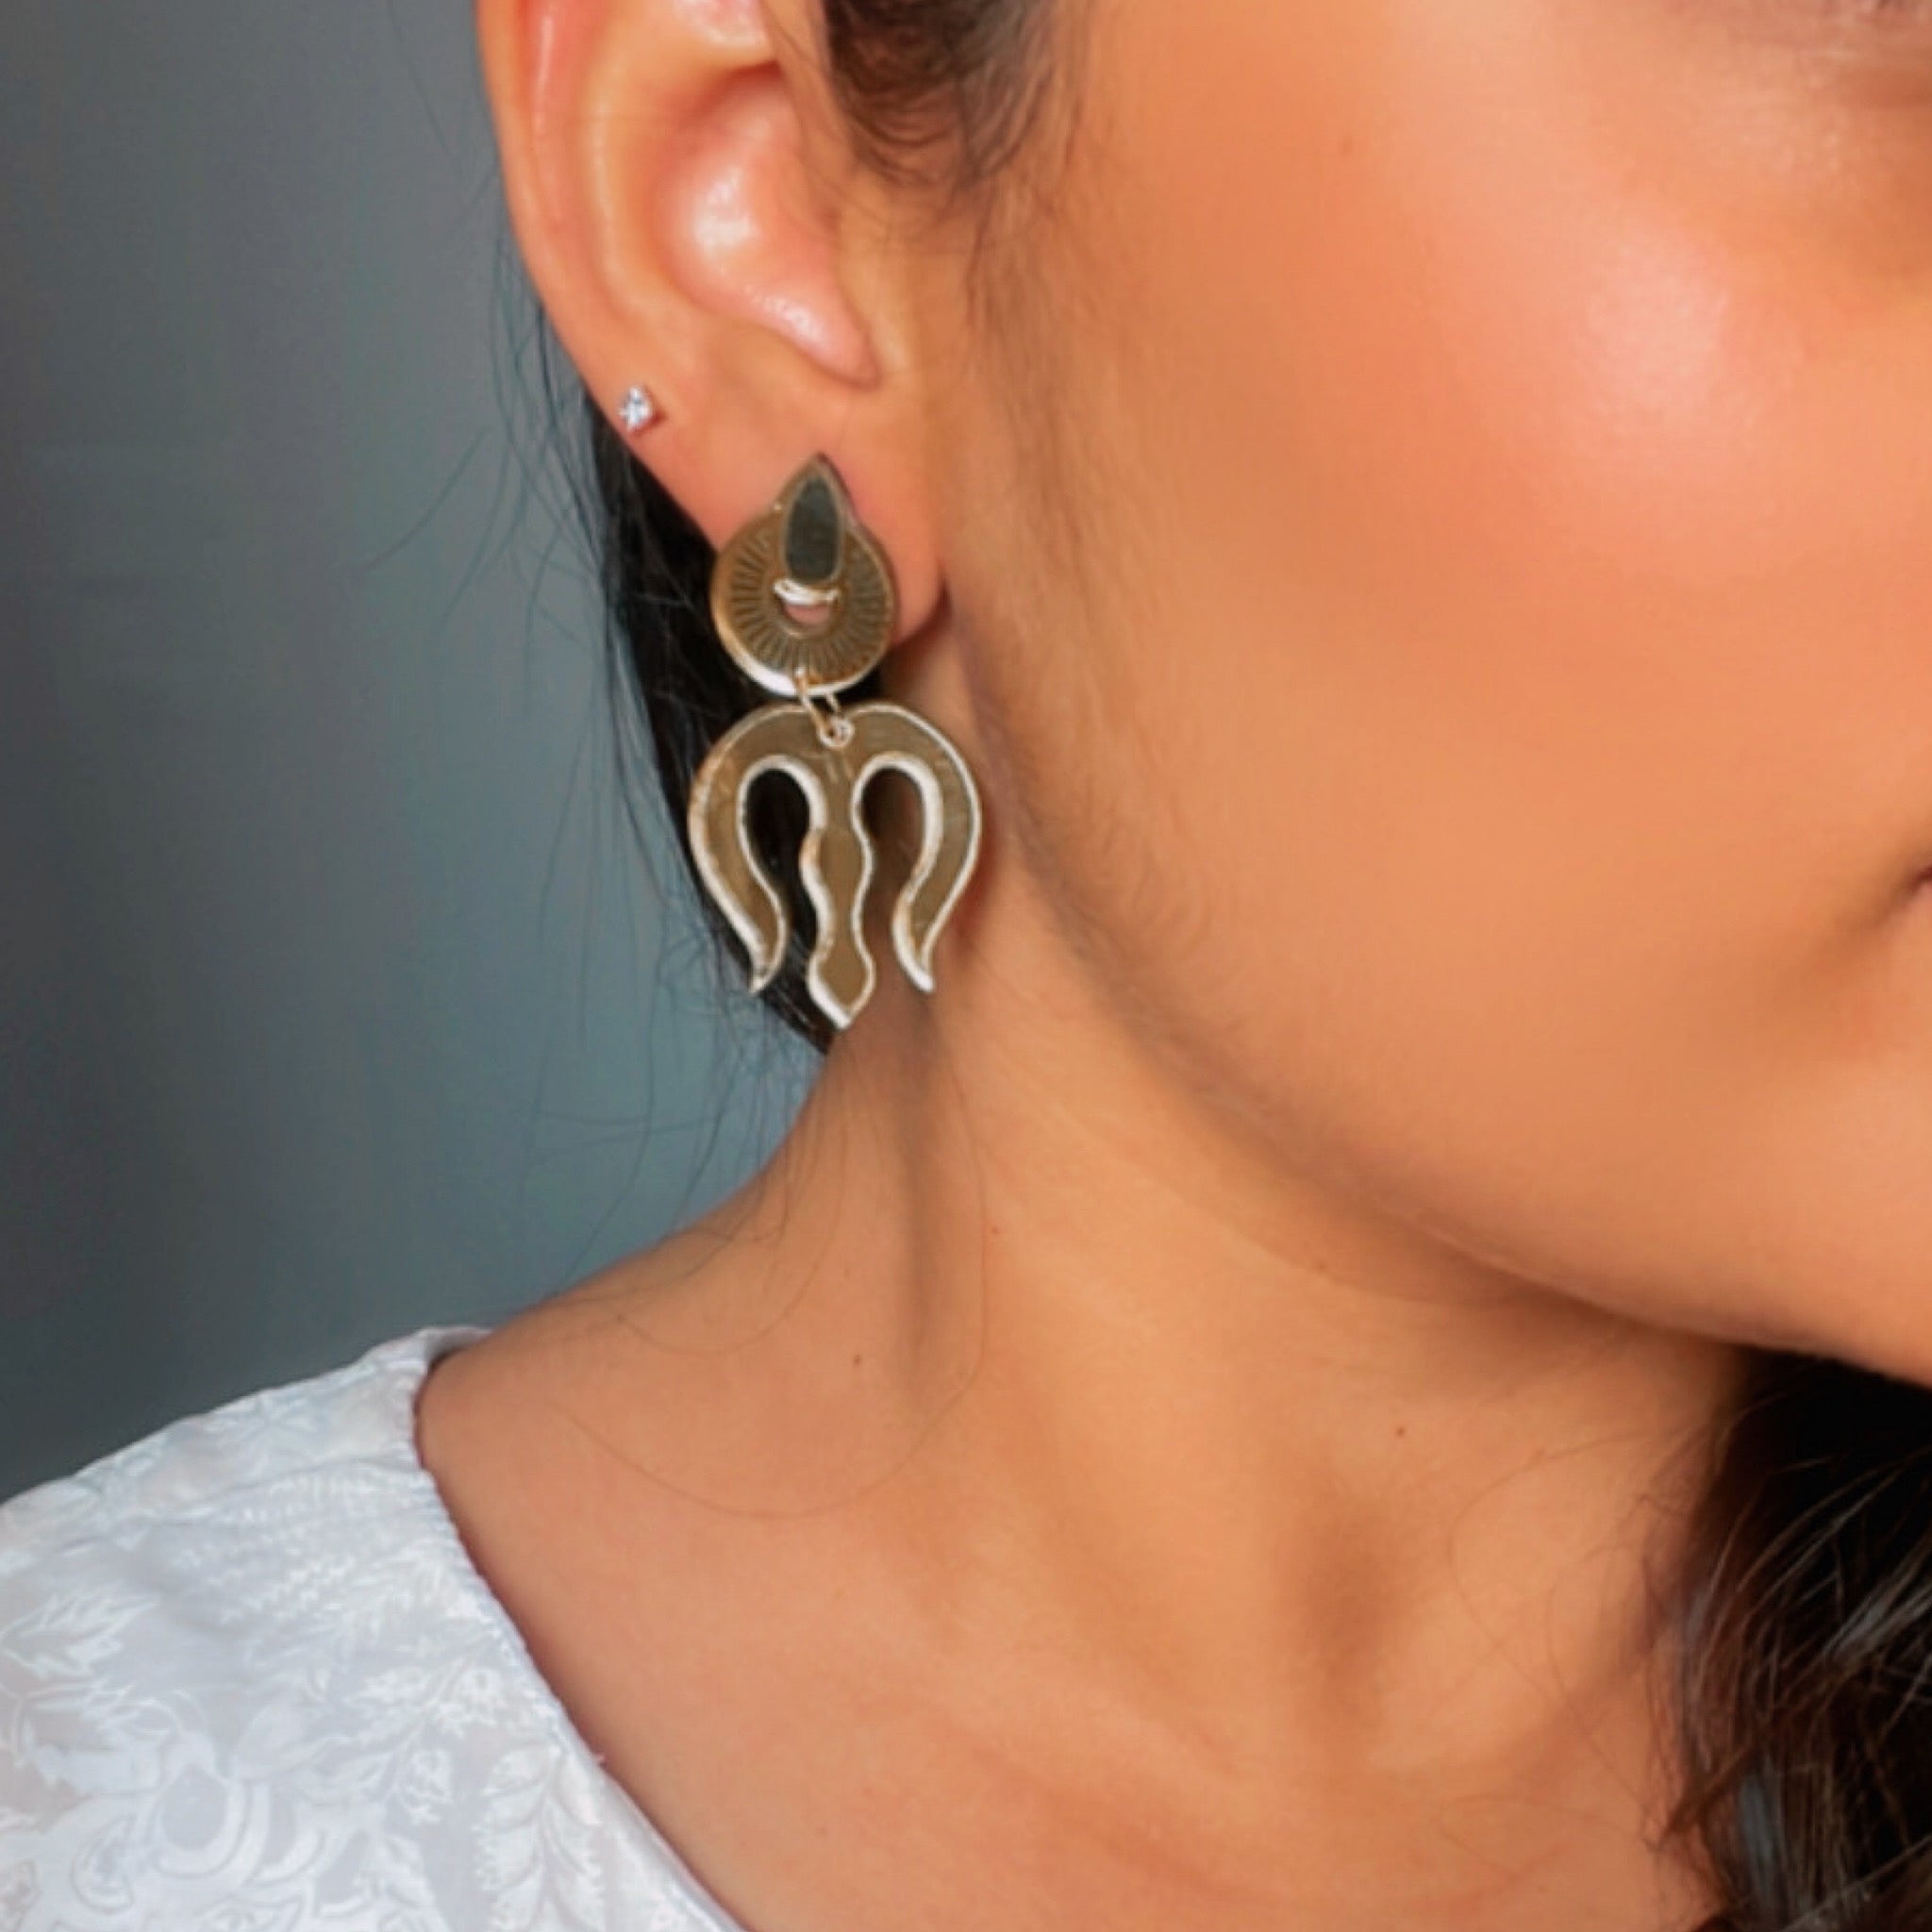 Trishul Earrings - Nian by Nidhi - Glassy Golden - worn by a girl